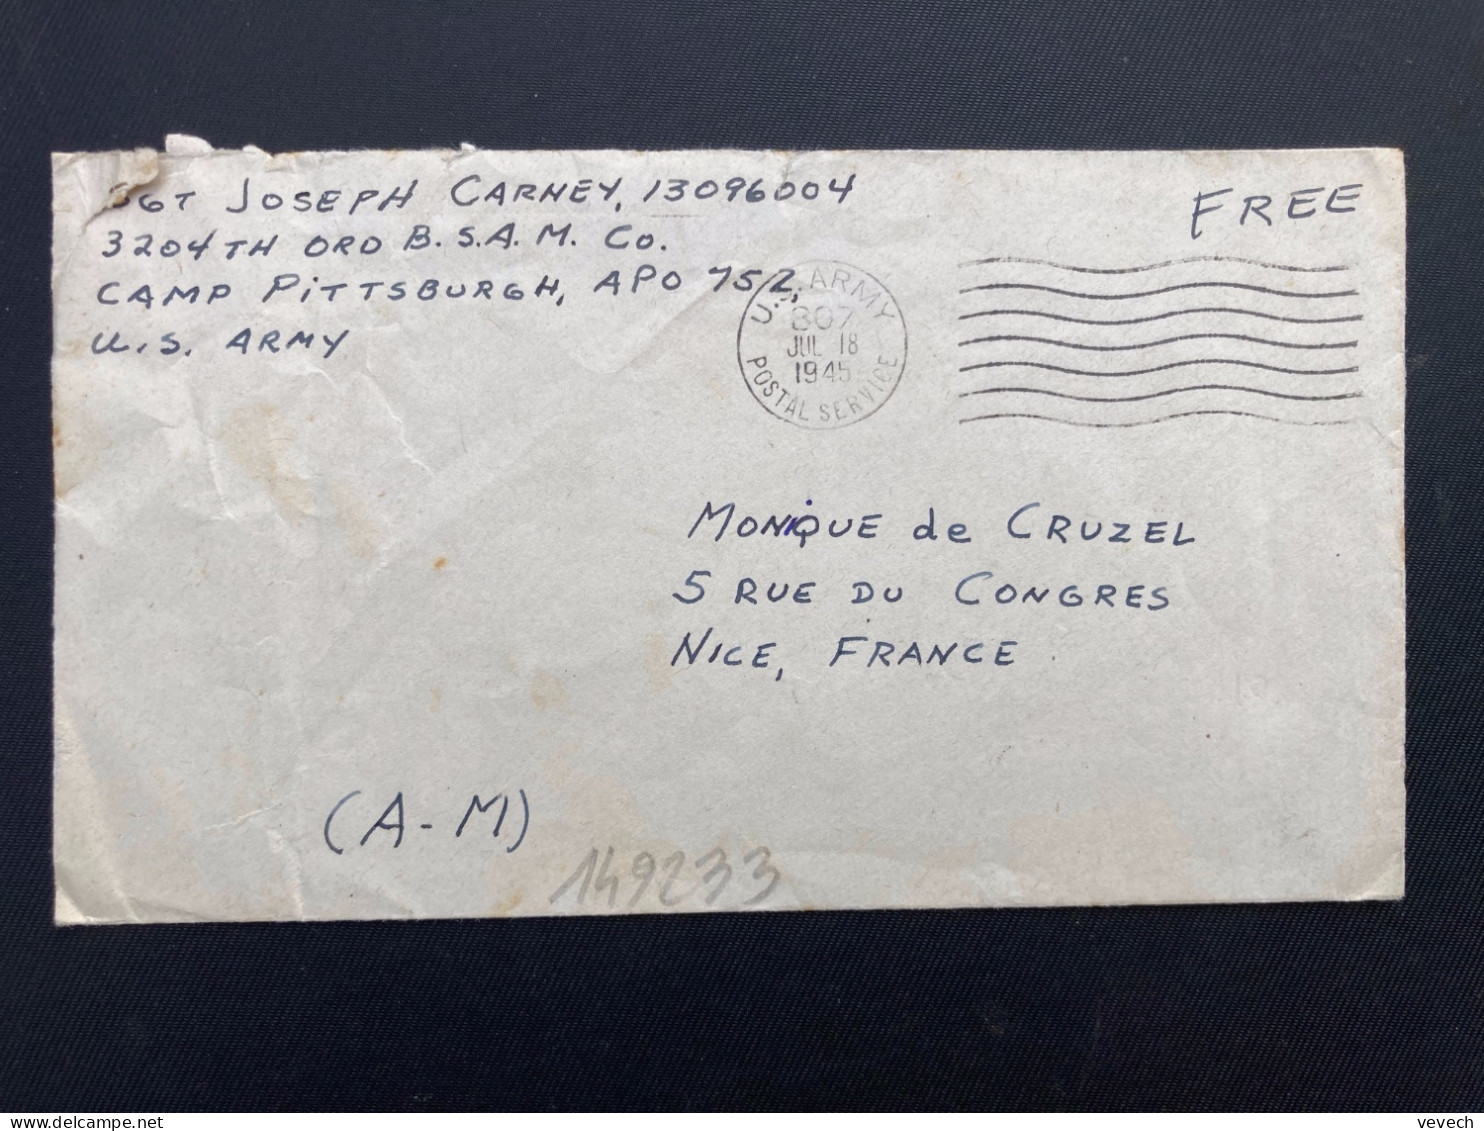 LETTRE Pour La FRANCE OBL.MEC.JUL 18 1945 US ARMY POSTAL SERVICE + EXP: SGT JOSEPH CARNEY APO 752 CAMP PITTSBURGH - Postal History